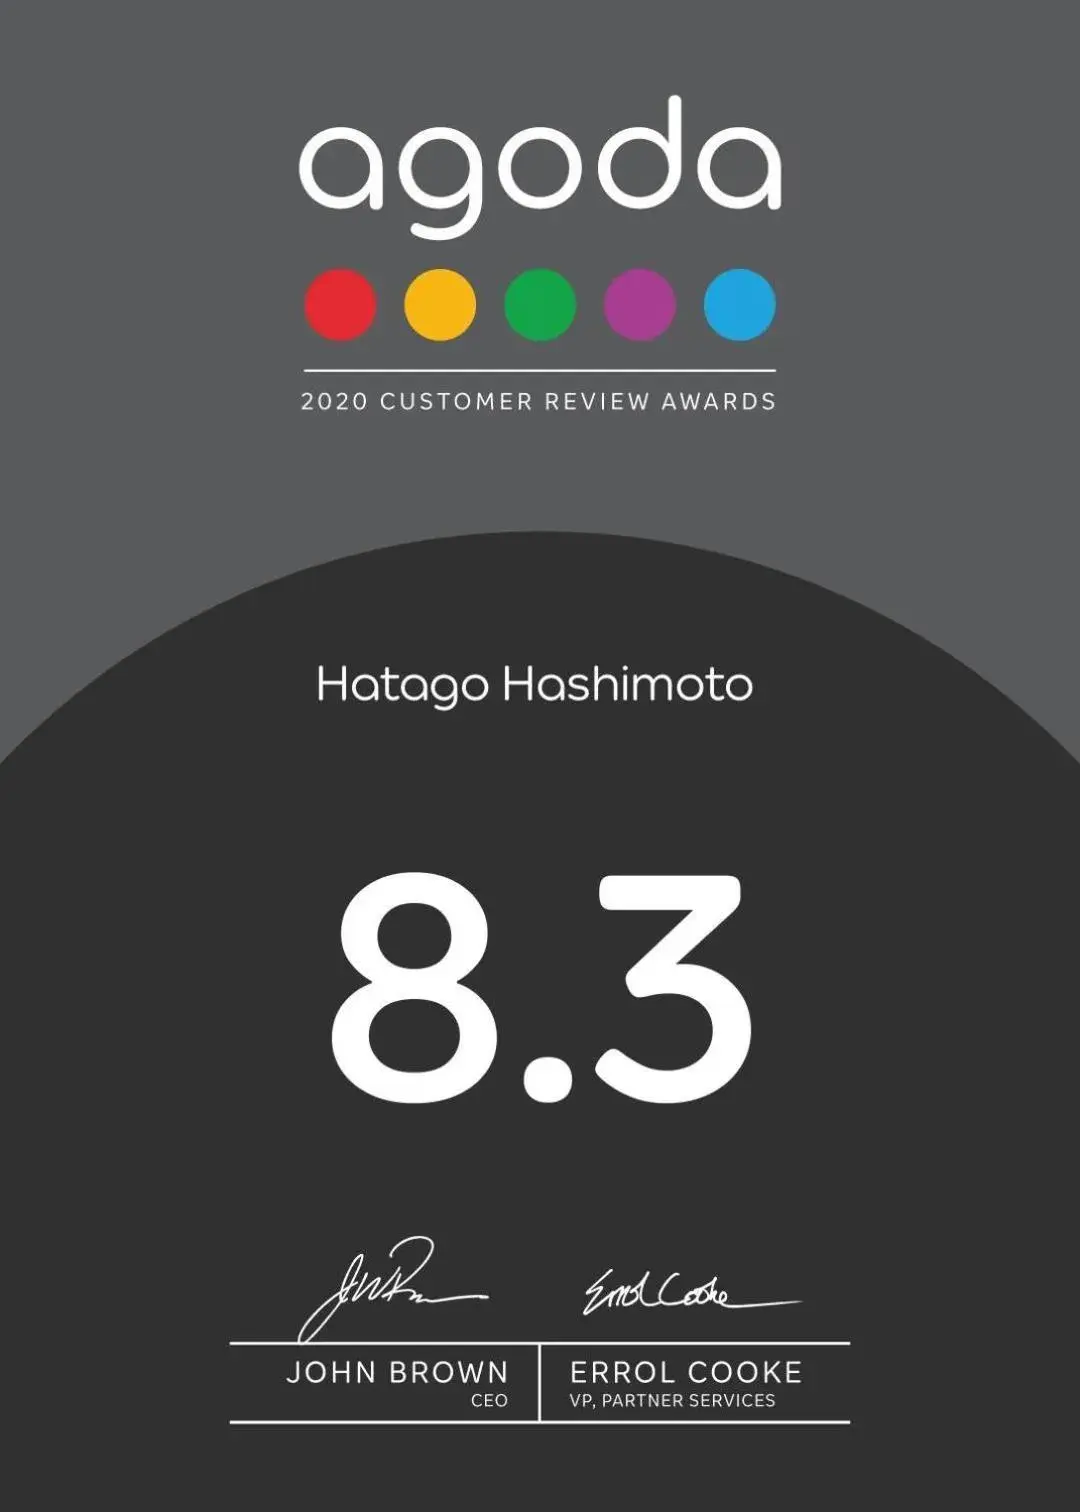 Certificate/Award in Hatago Hashimoto